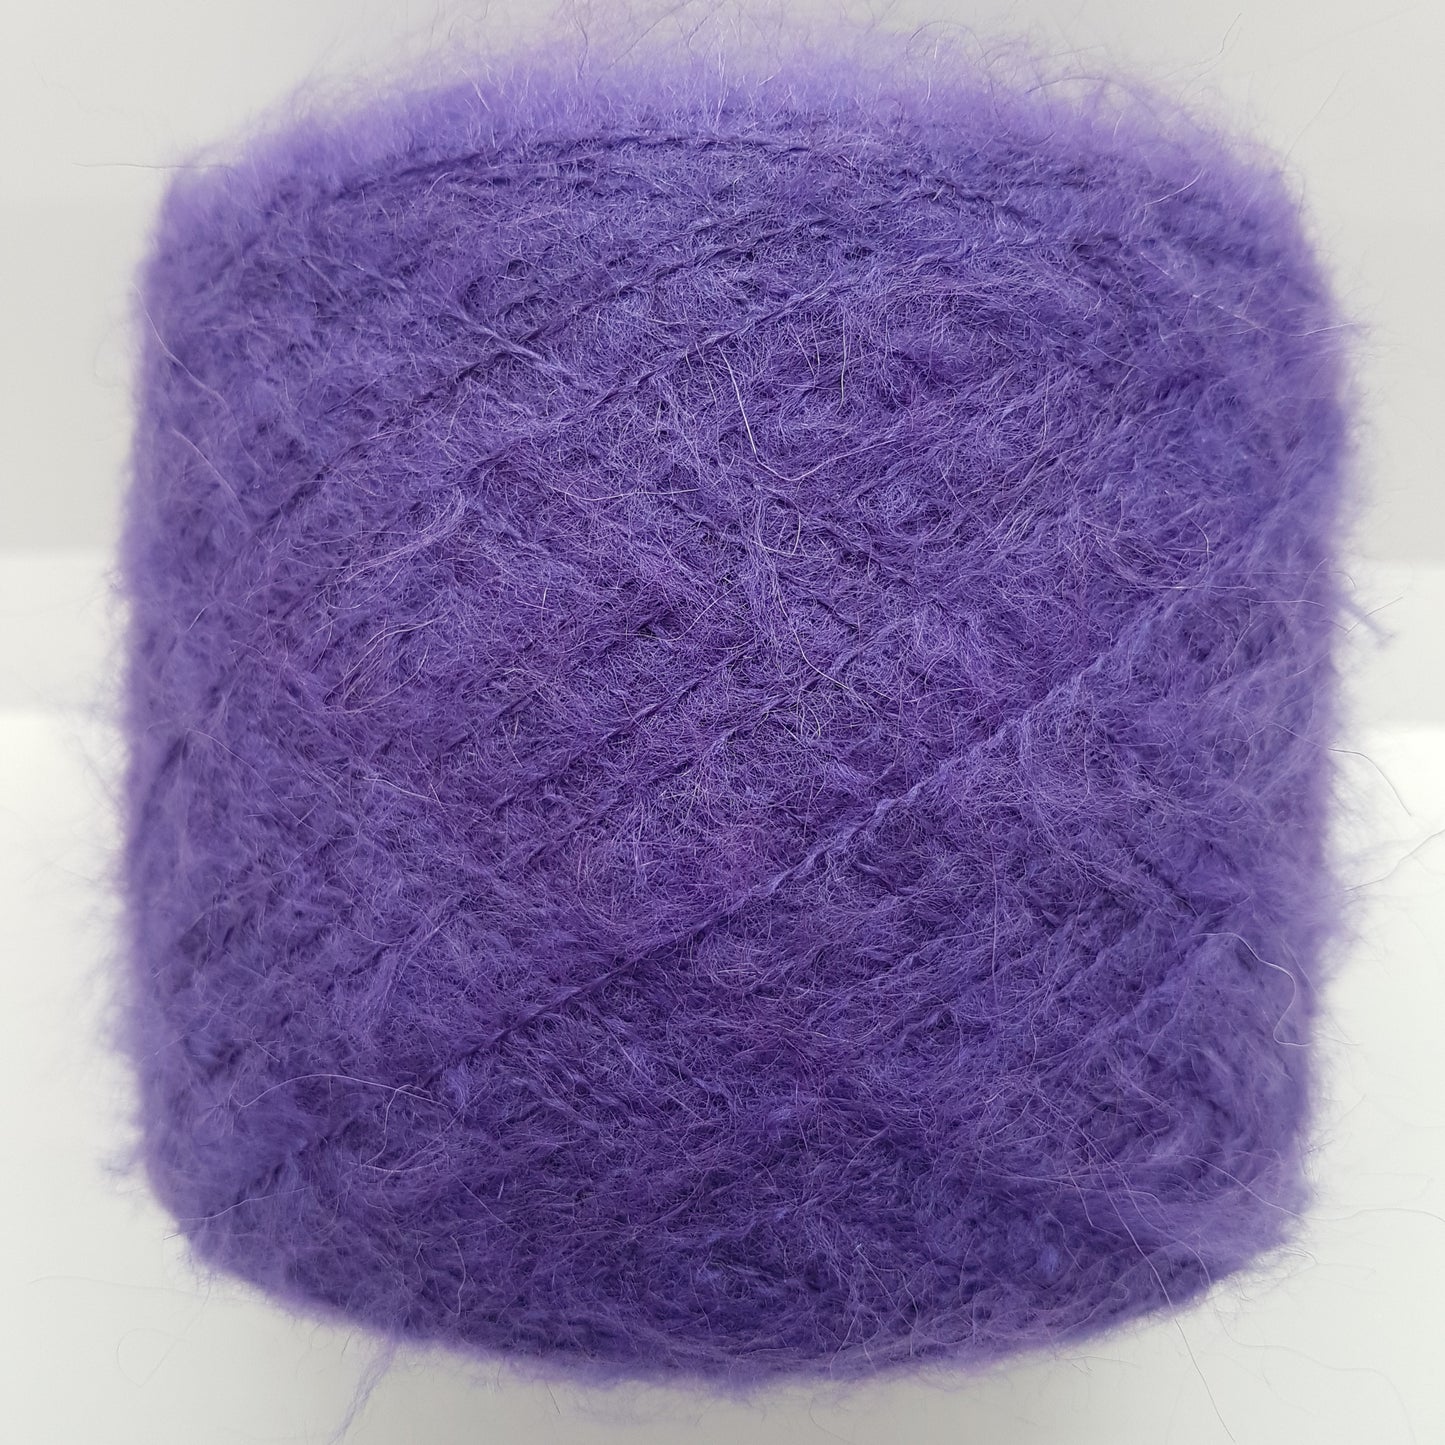 100g mohair italien fil couleur violet  N.282